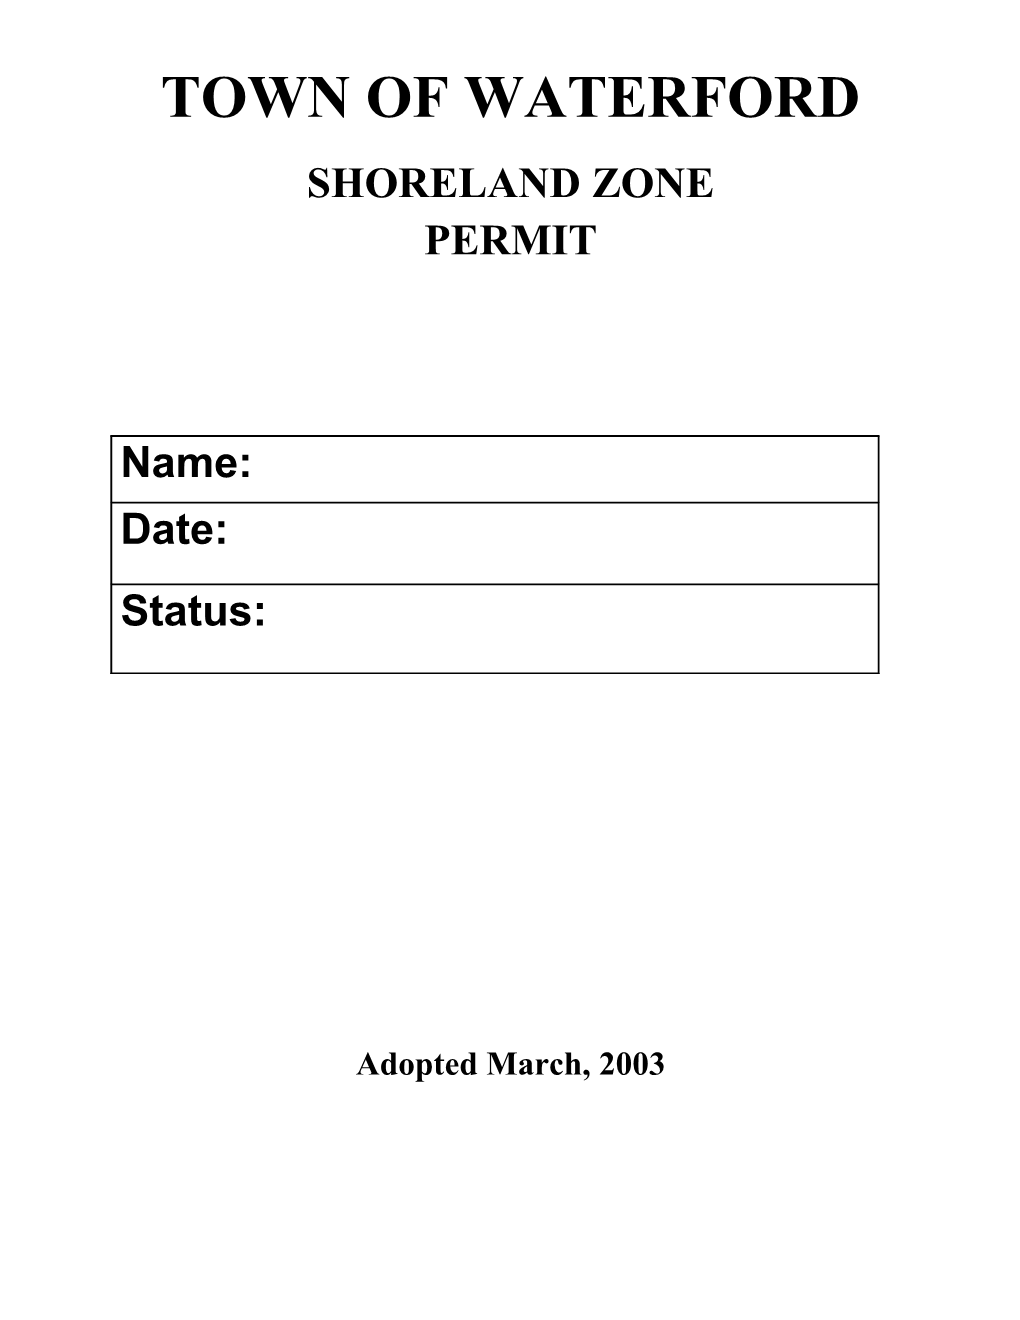 Shoreland Zone Permit Procedure